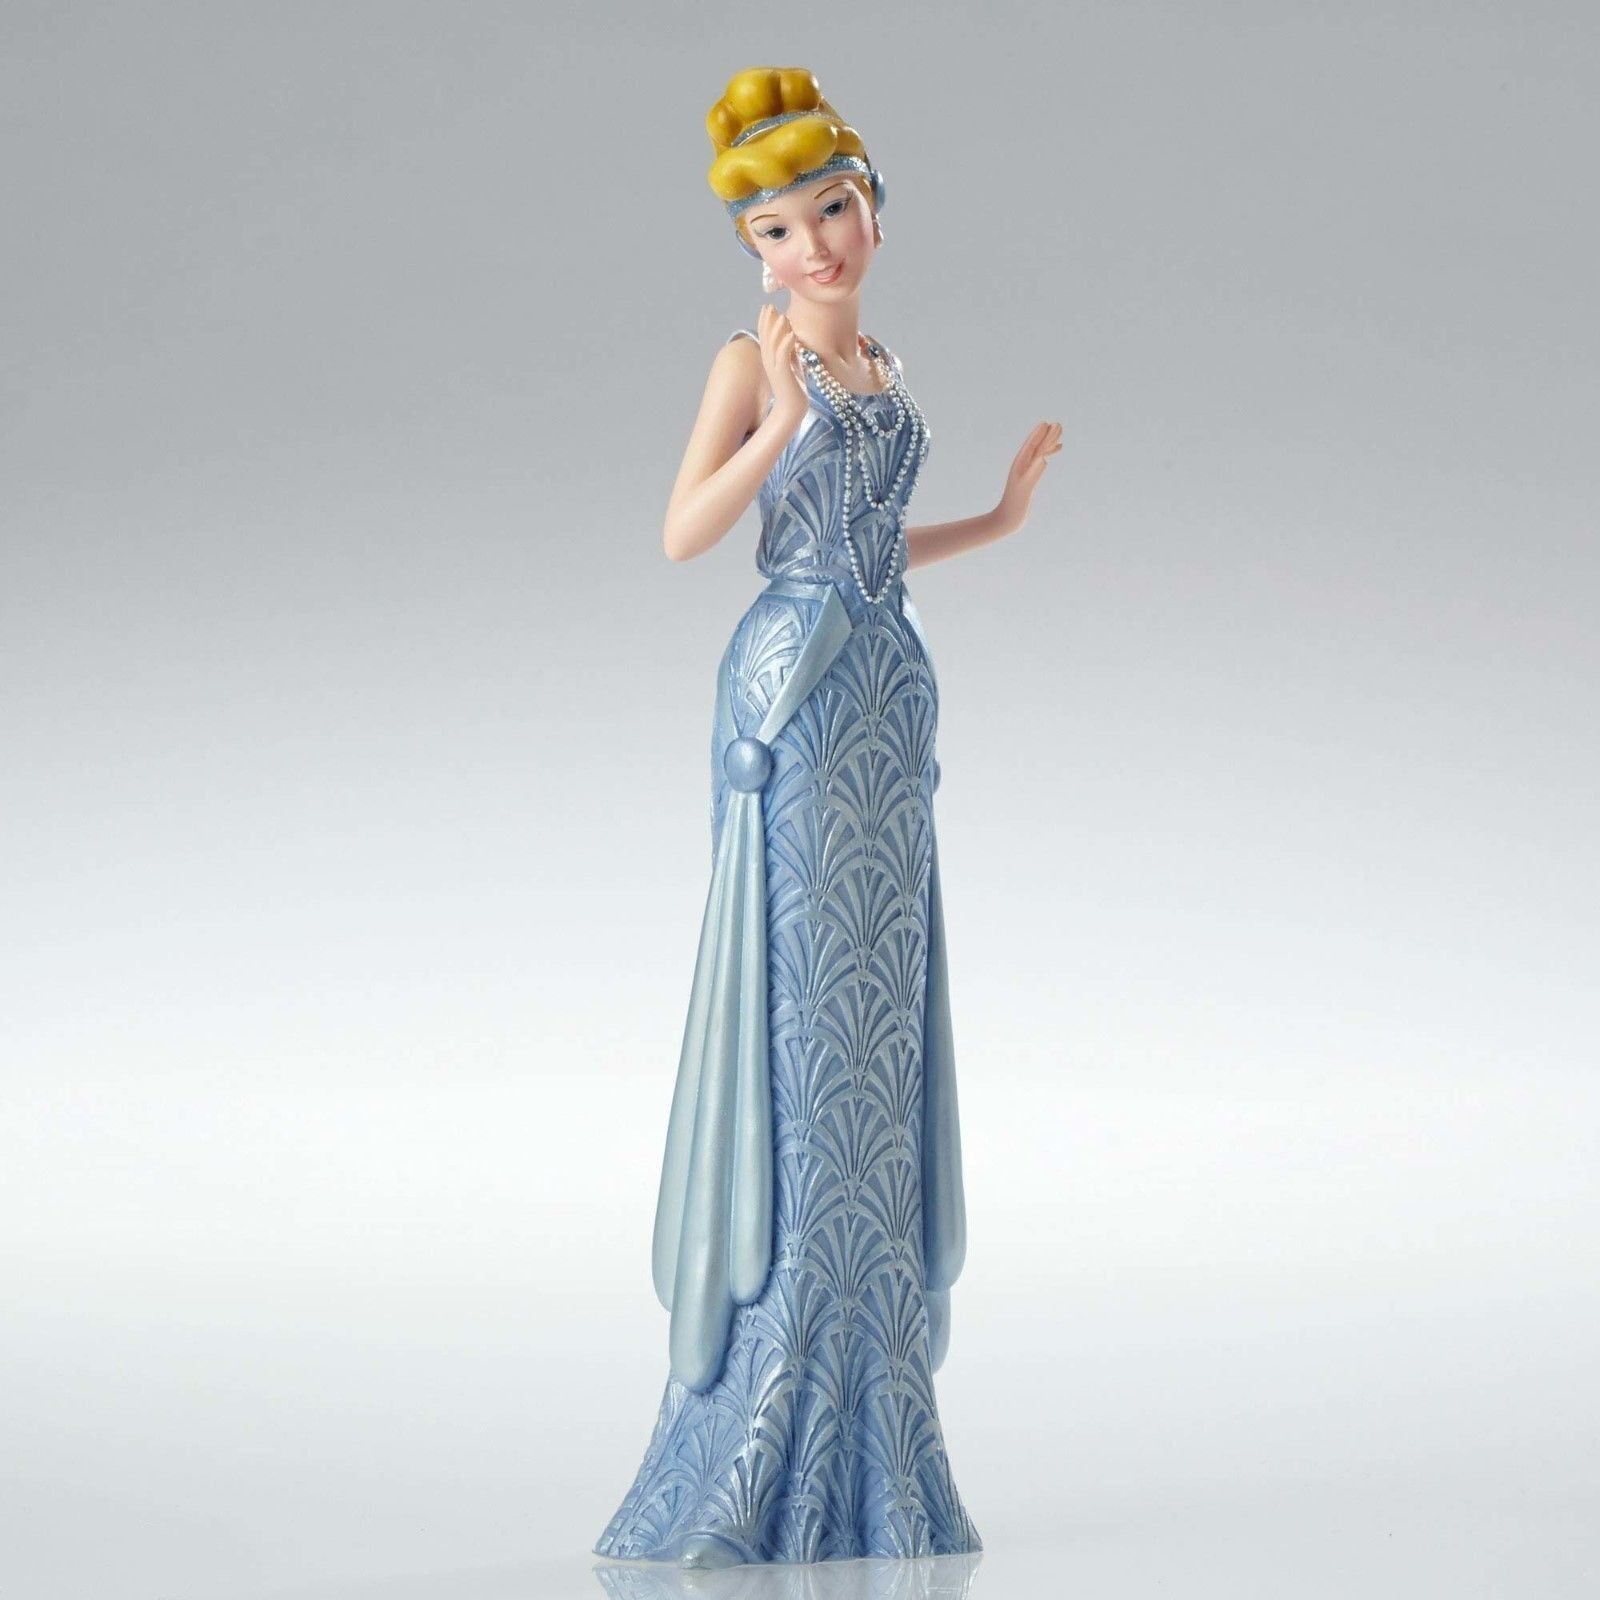 Disney CINDERELLA Couture de Force Art Deco Enesco Figurine 4053353 - New In Box